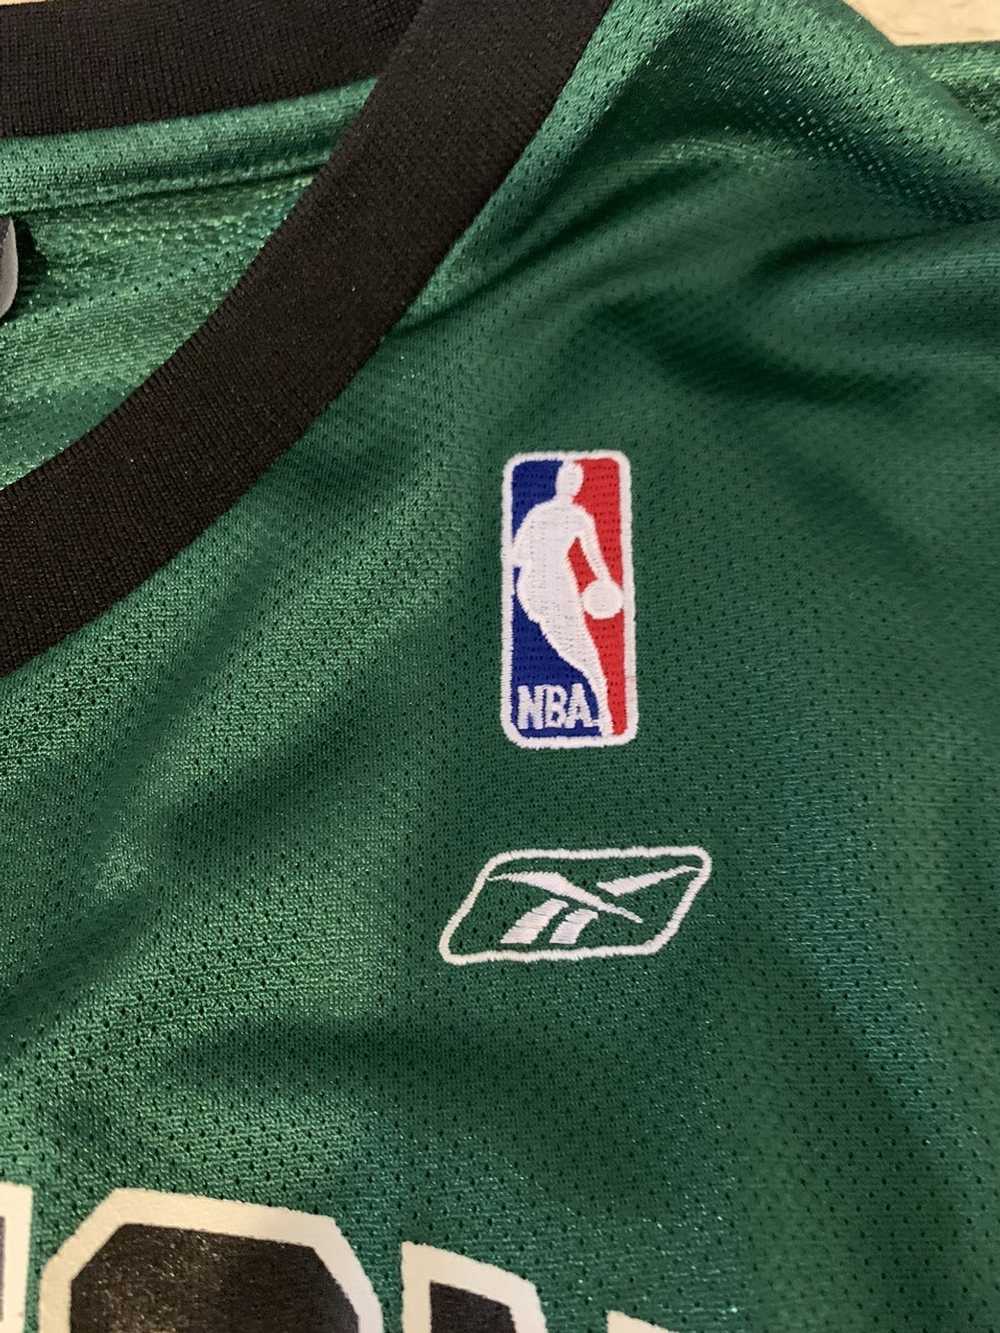 NEW Ladies Boston Celtics Authentic NBA Jersey Dress Paul Pierce